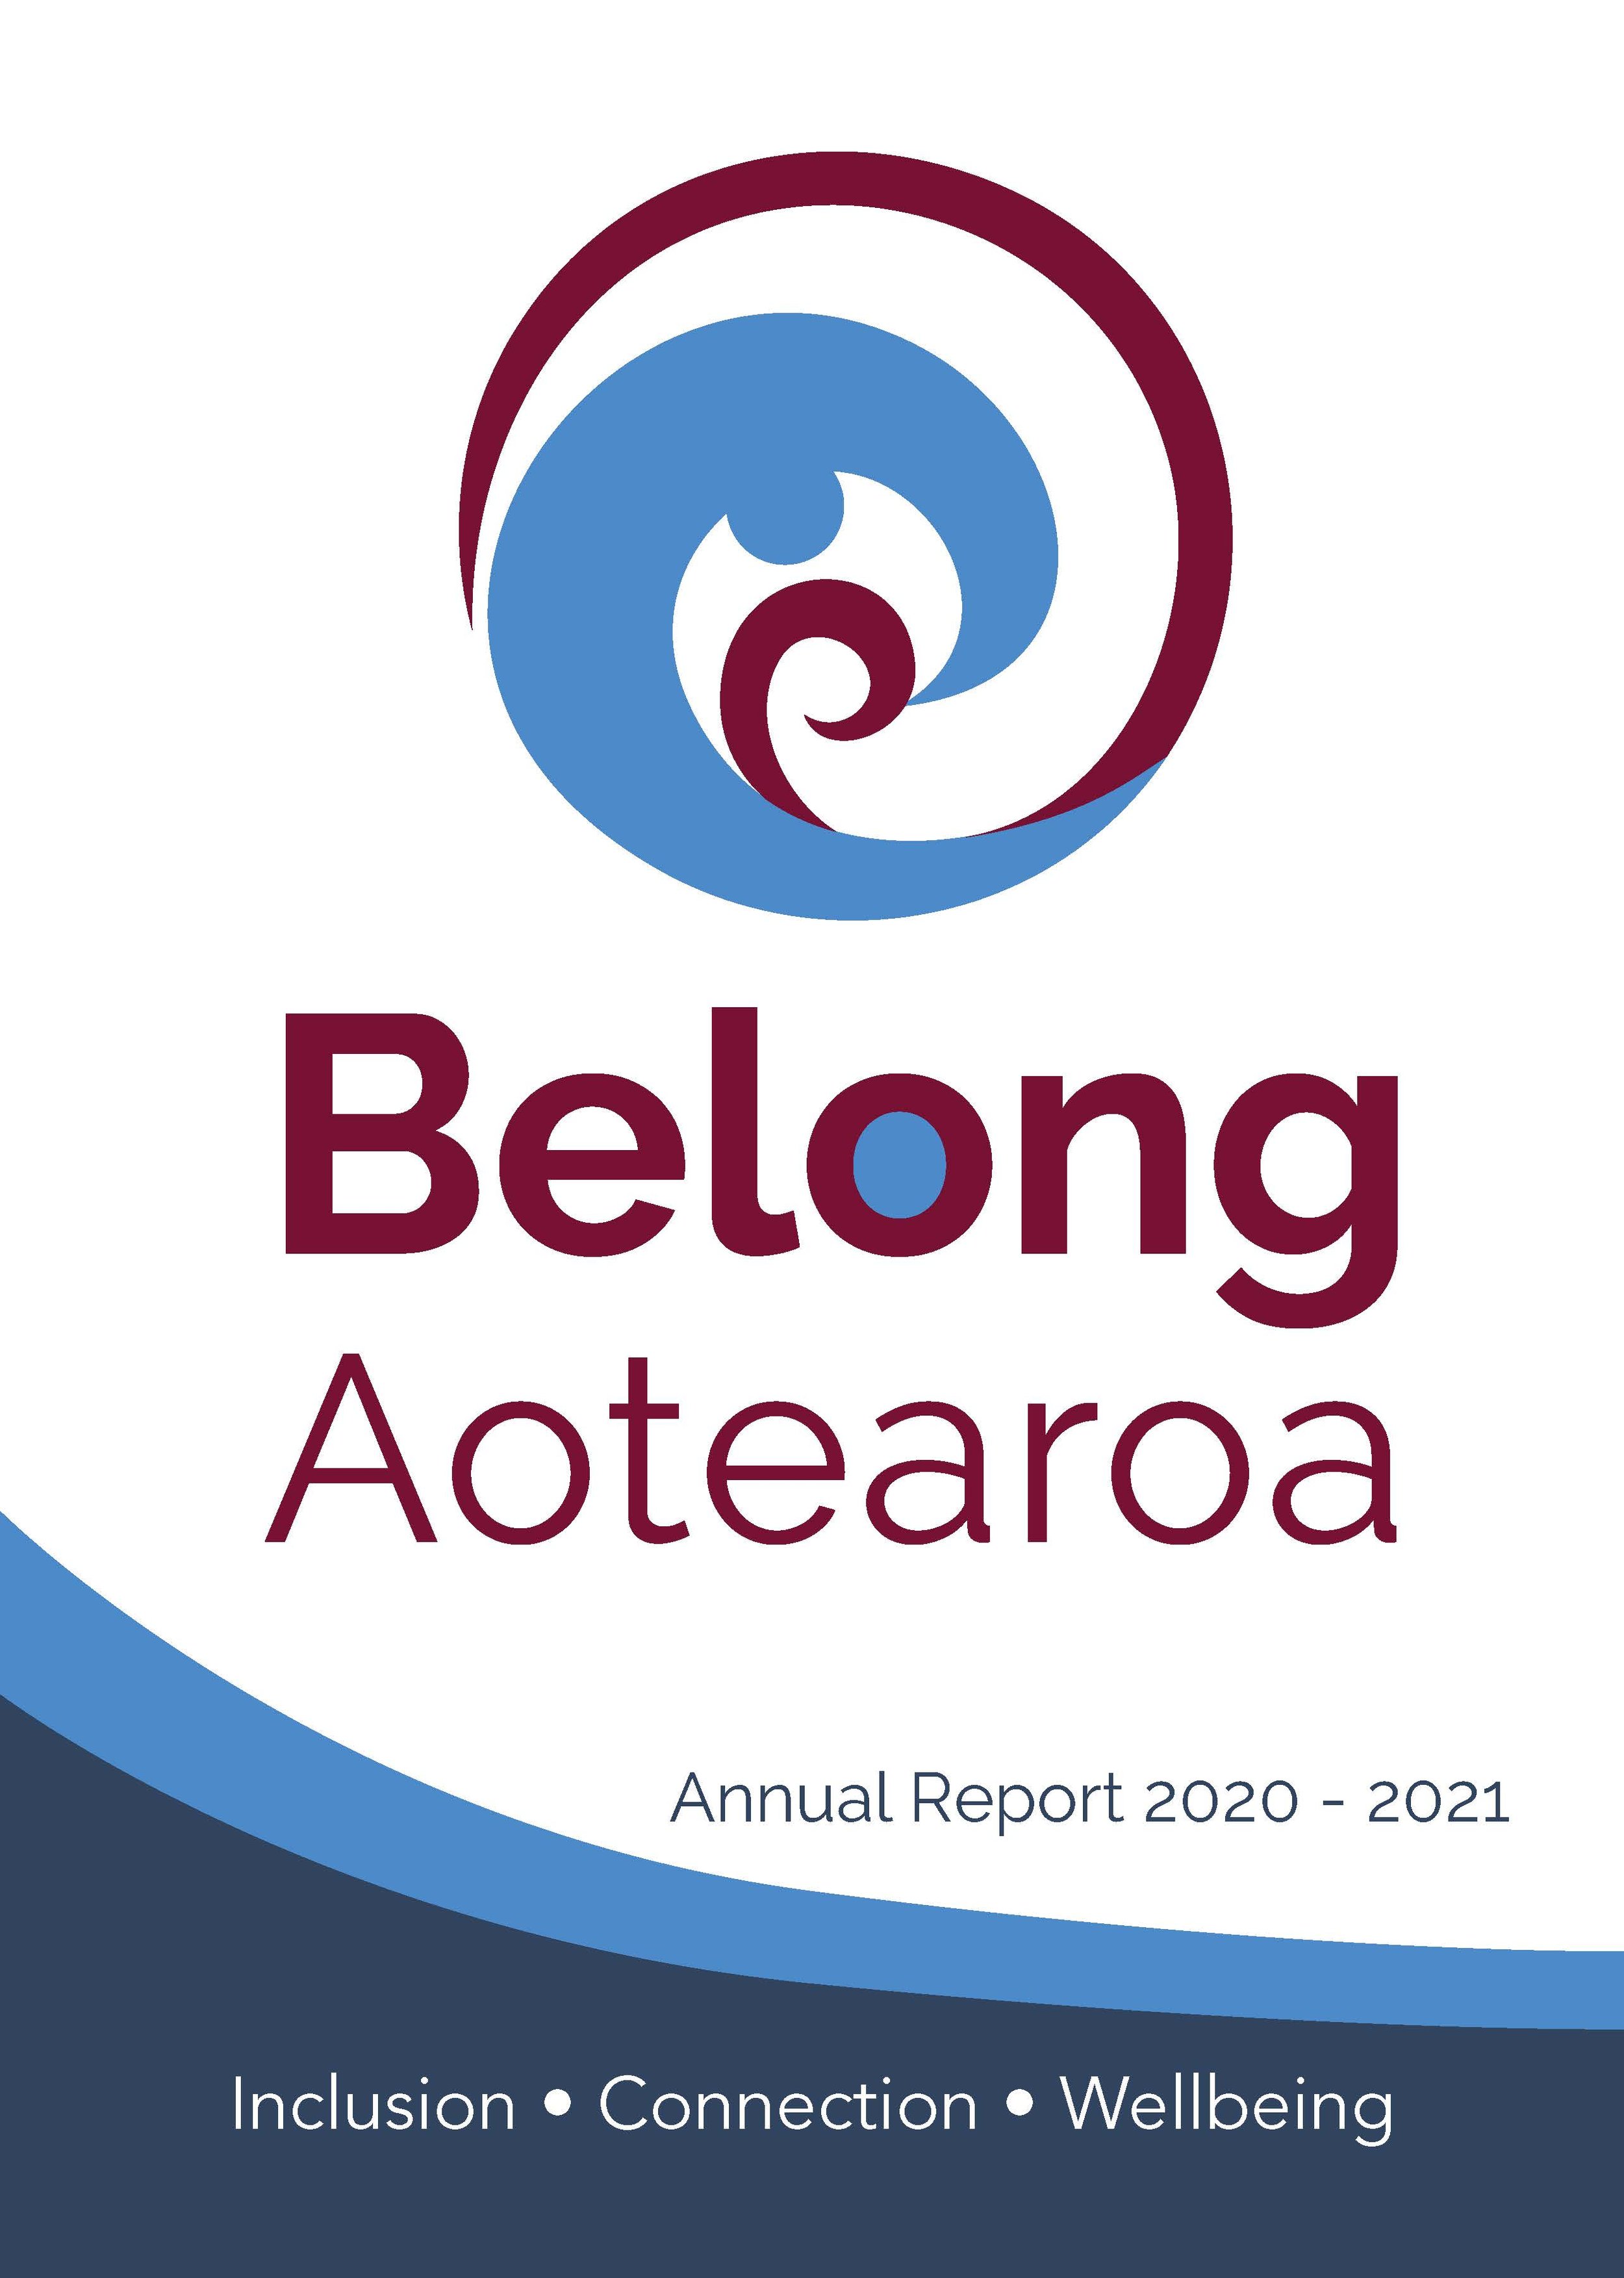 Belong Aotearoa Annual Report 2020 - 2021